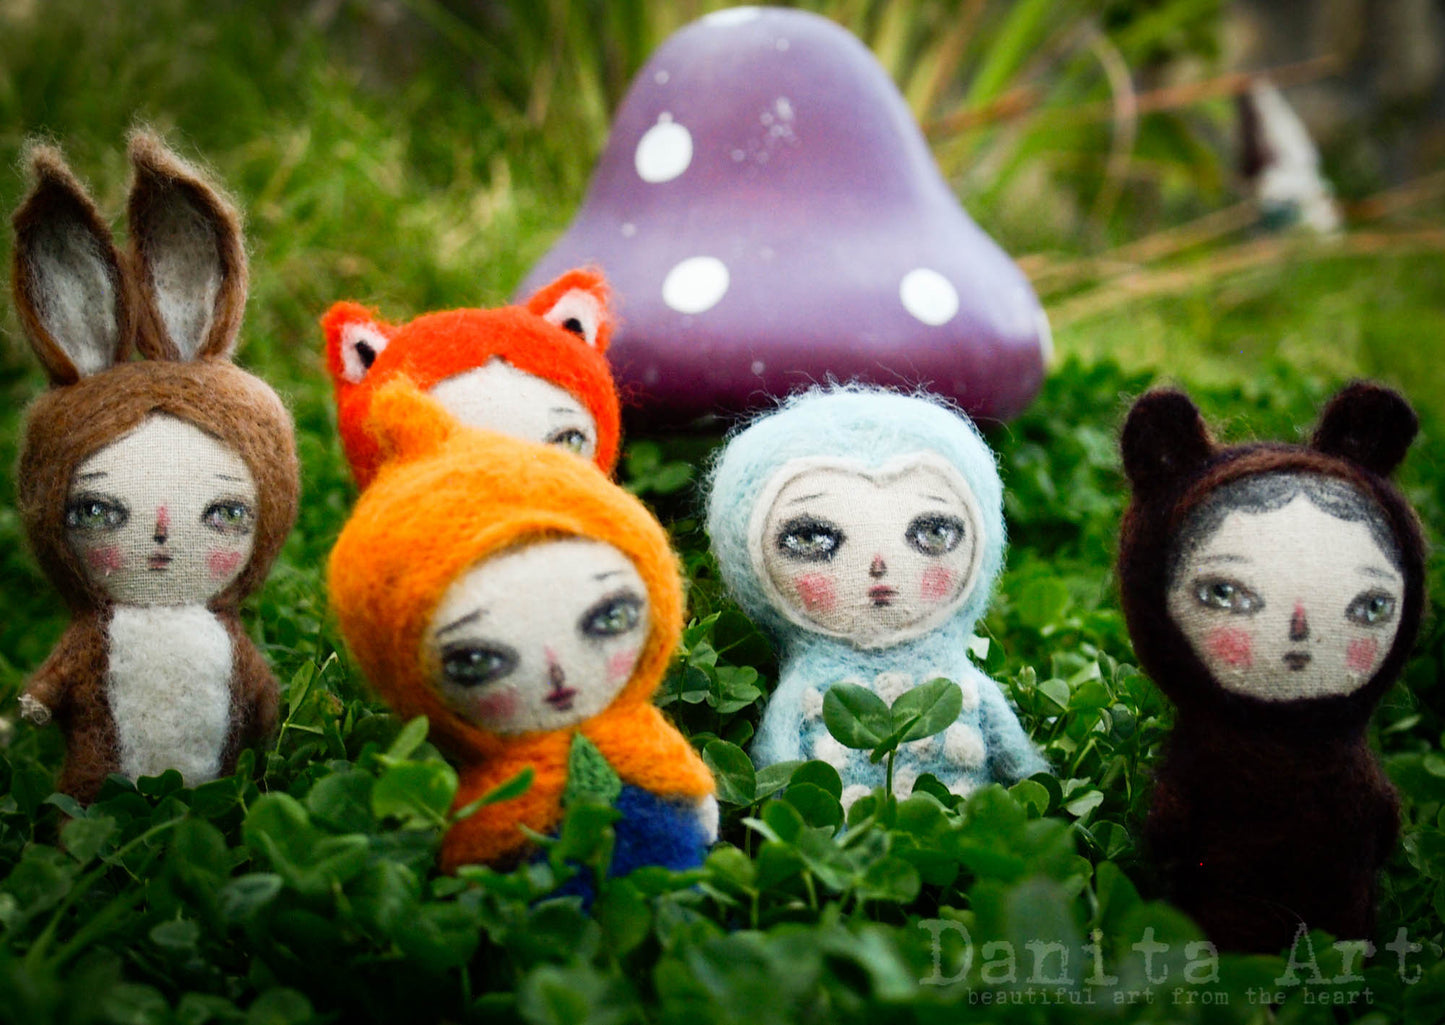 Foxy, the sly fox, Miniature Dolls by Danita Art